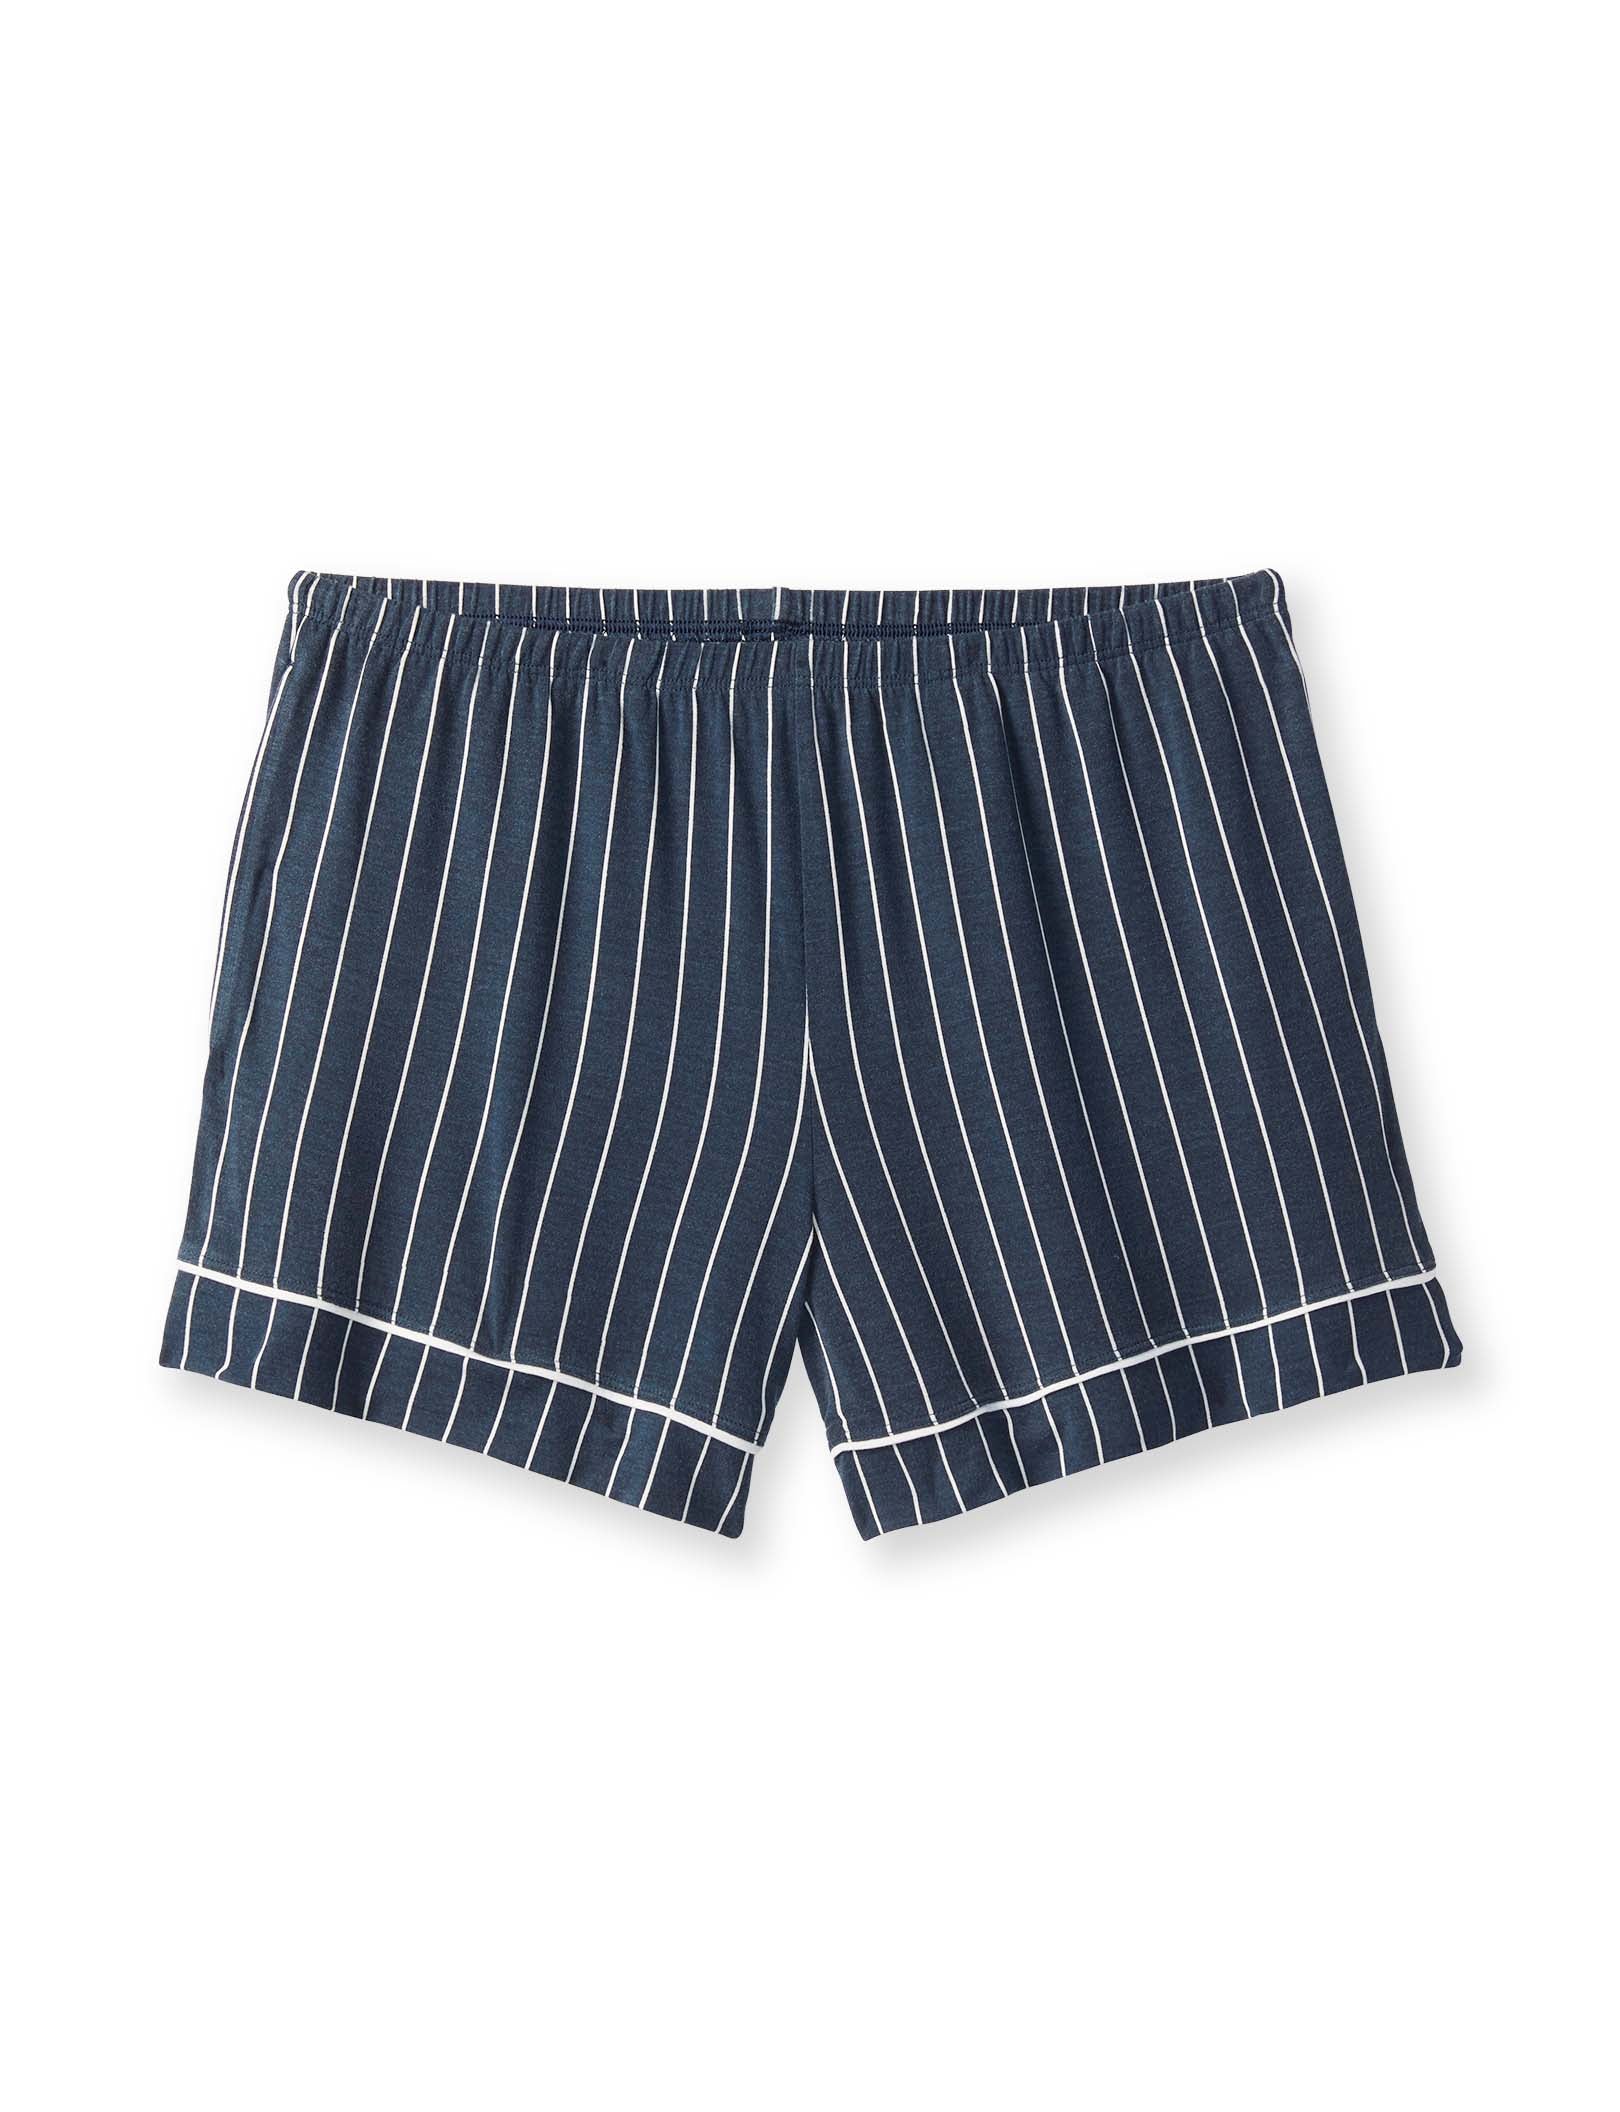 Women's Short Sleeve Top & Short Pajama Set, Navy Blazer Pinstripe